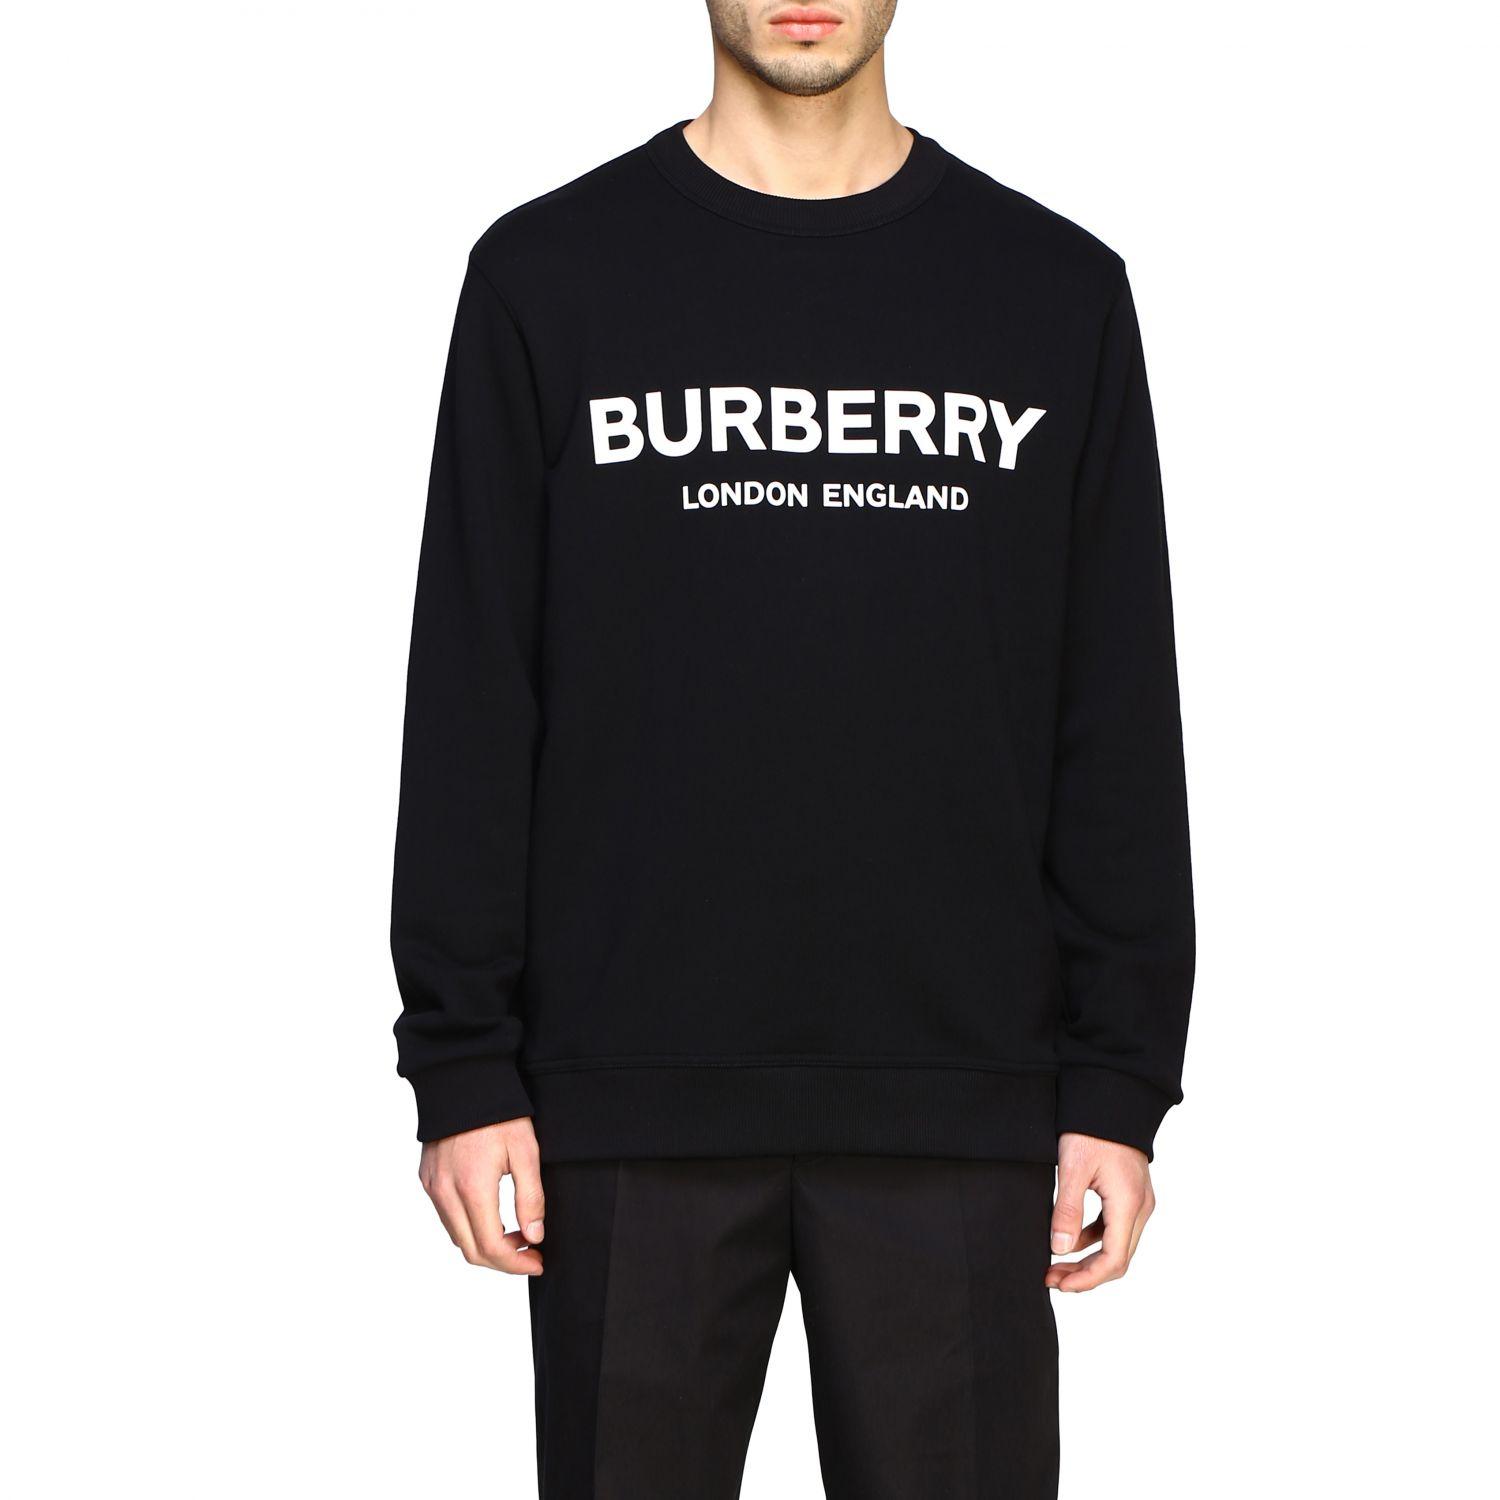 Burberry Crewneck Sweatshirt With Contrasting Logo in Black for Men - Lyst